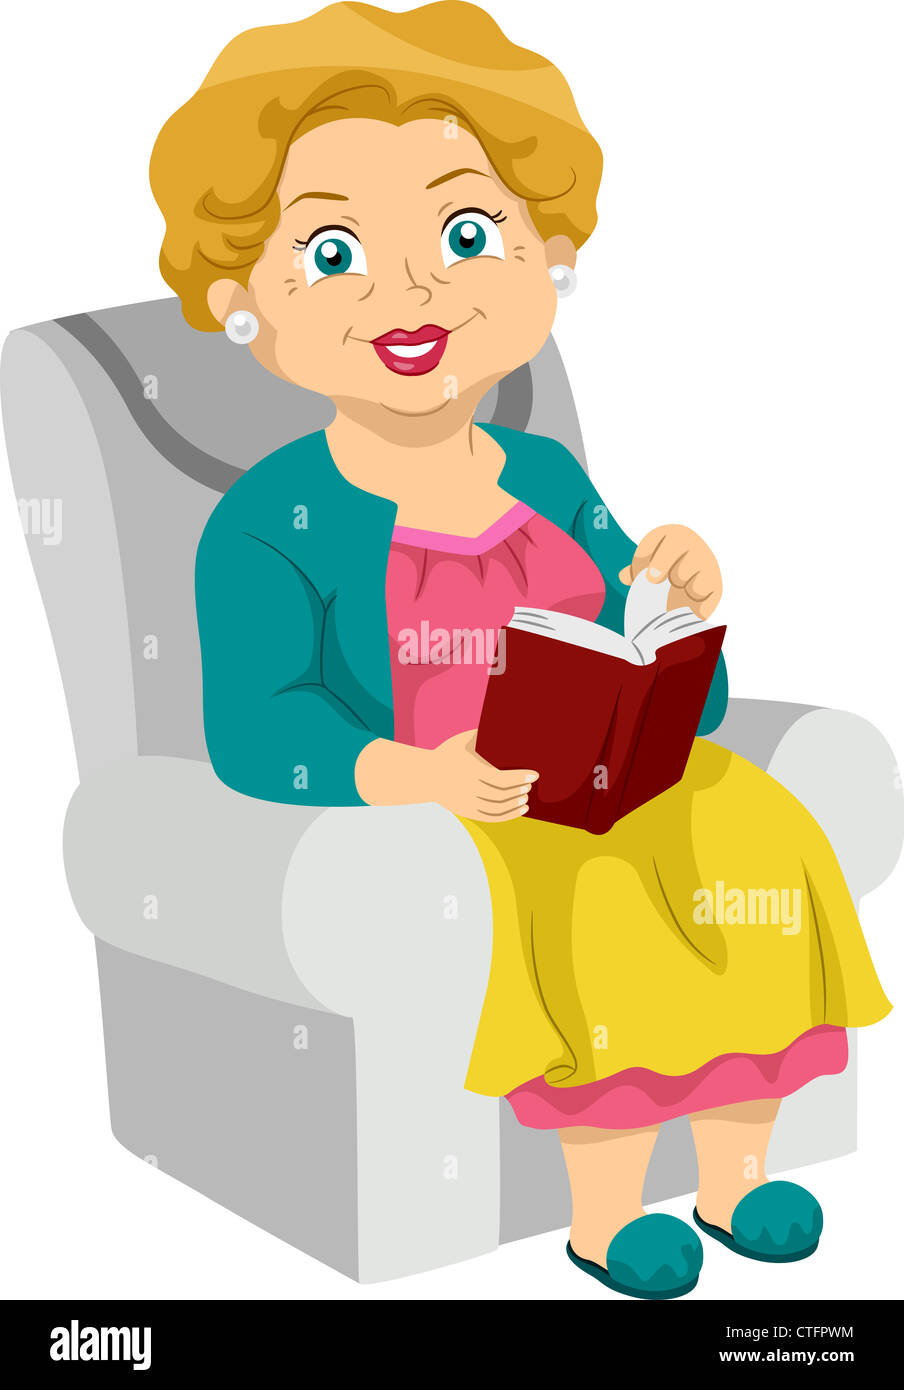 https://c8.alamy.com/comp/CTFPWM/illustration-featuring-an-elderly-woman-reading-a-book-CTFPWM.jpg